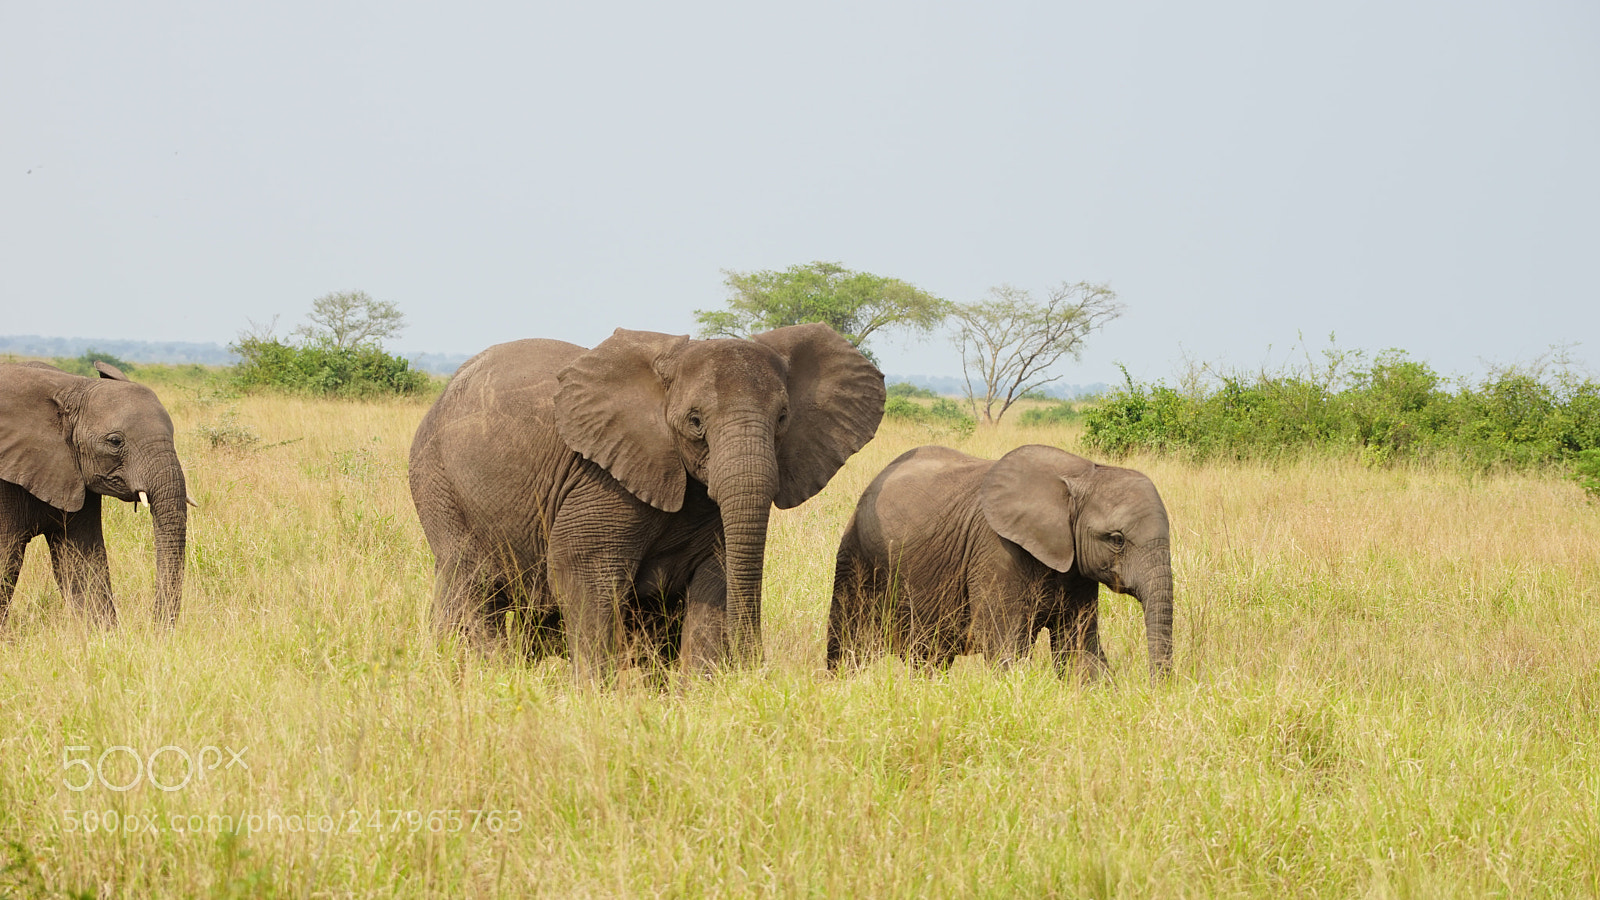 Sony a7 sample photo. Elephant in uganda photography